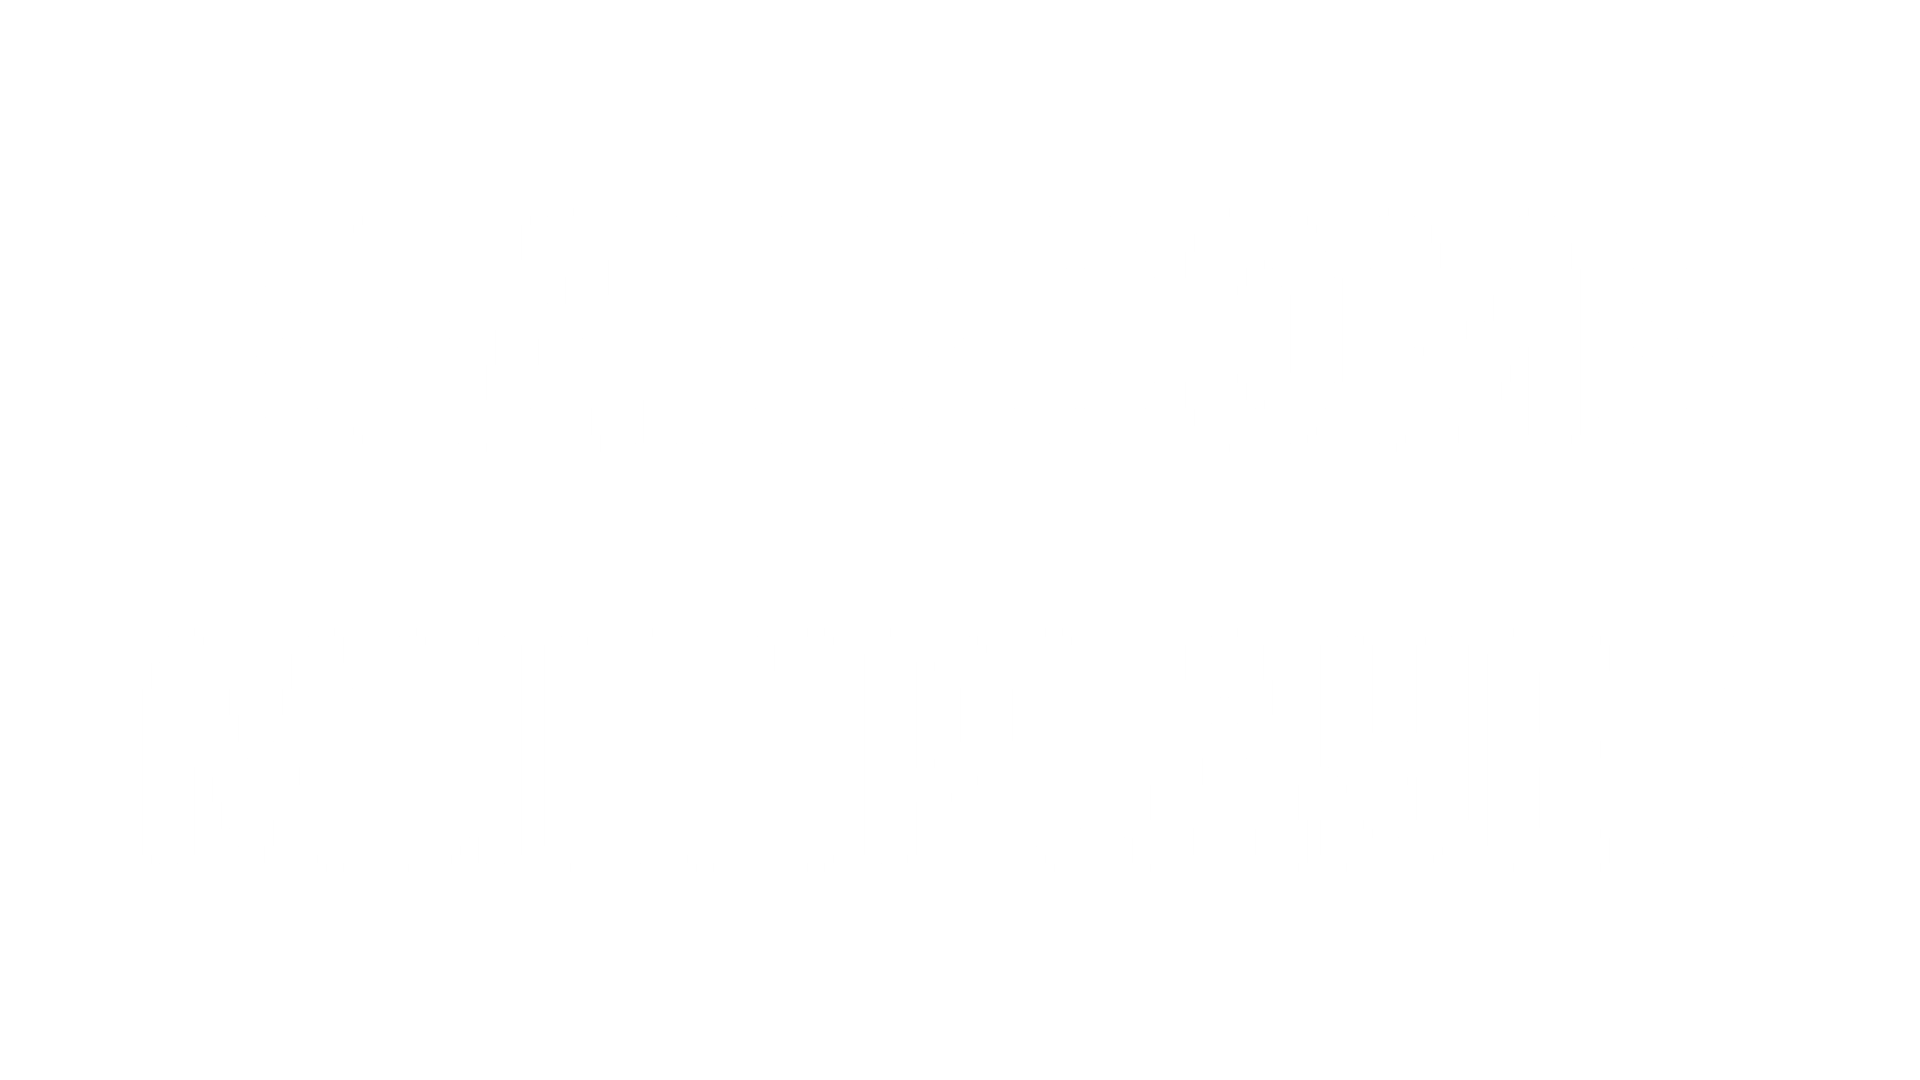 1K DOWNLOADS! - Beanrooms Multiplayer Beta (Backrooms Game) by gameburger